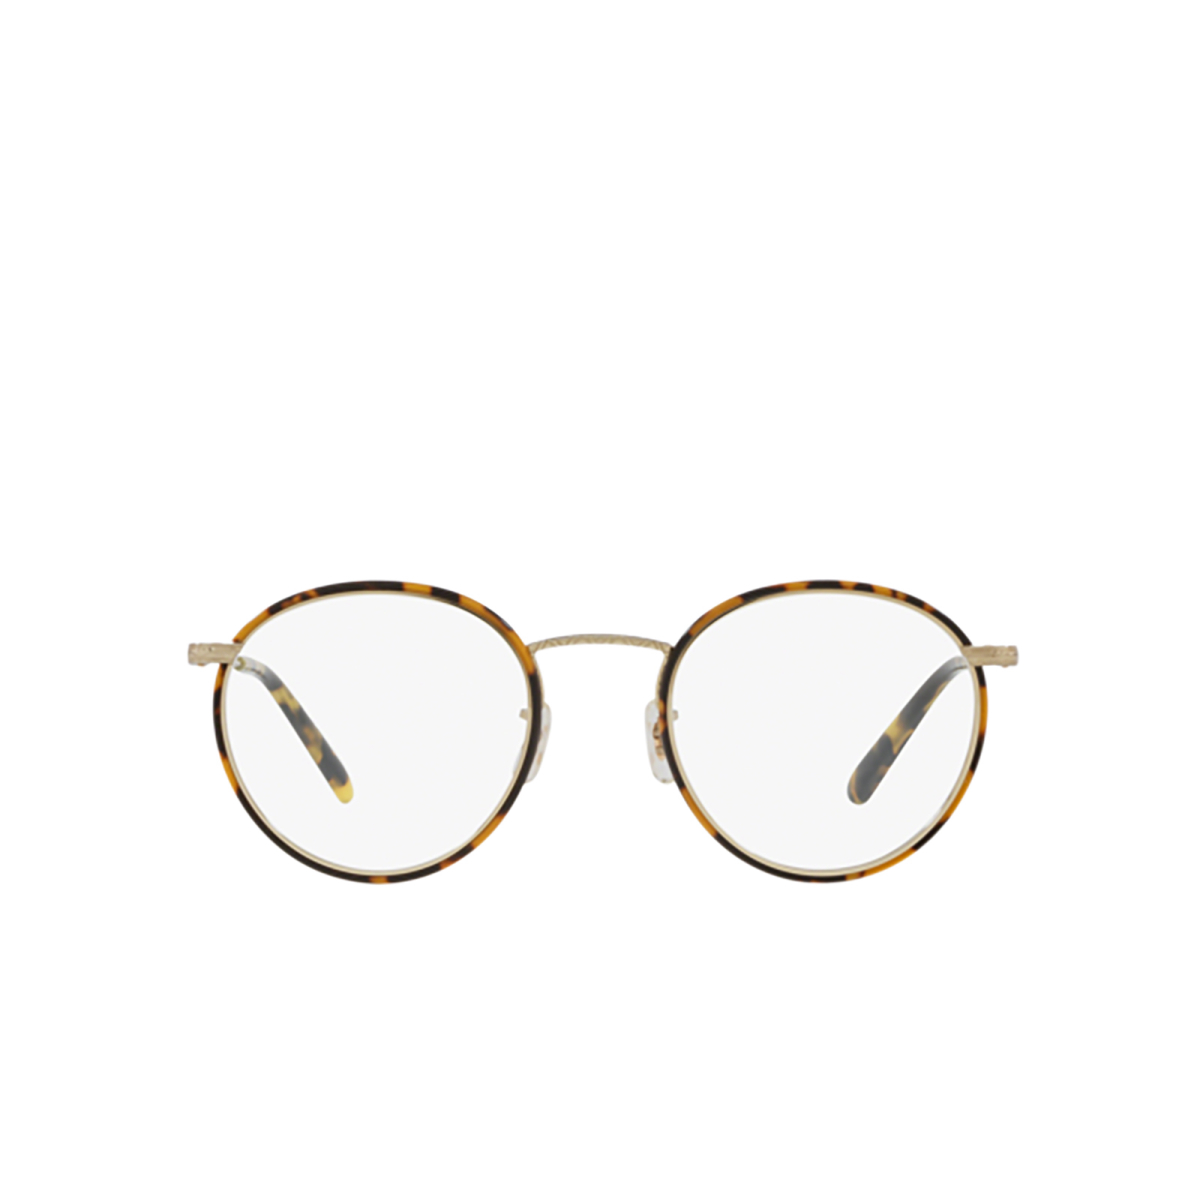 Oliver Peoples® Round Eyeglasses: Colloff OV1242TD color 5035 - 1/3.